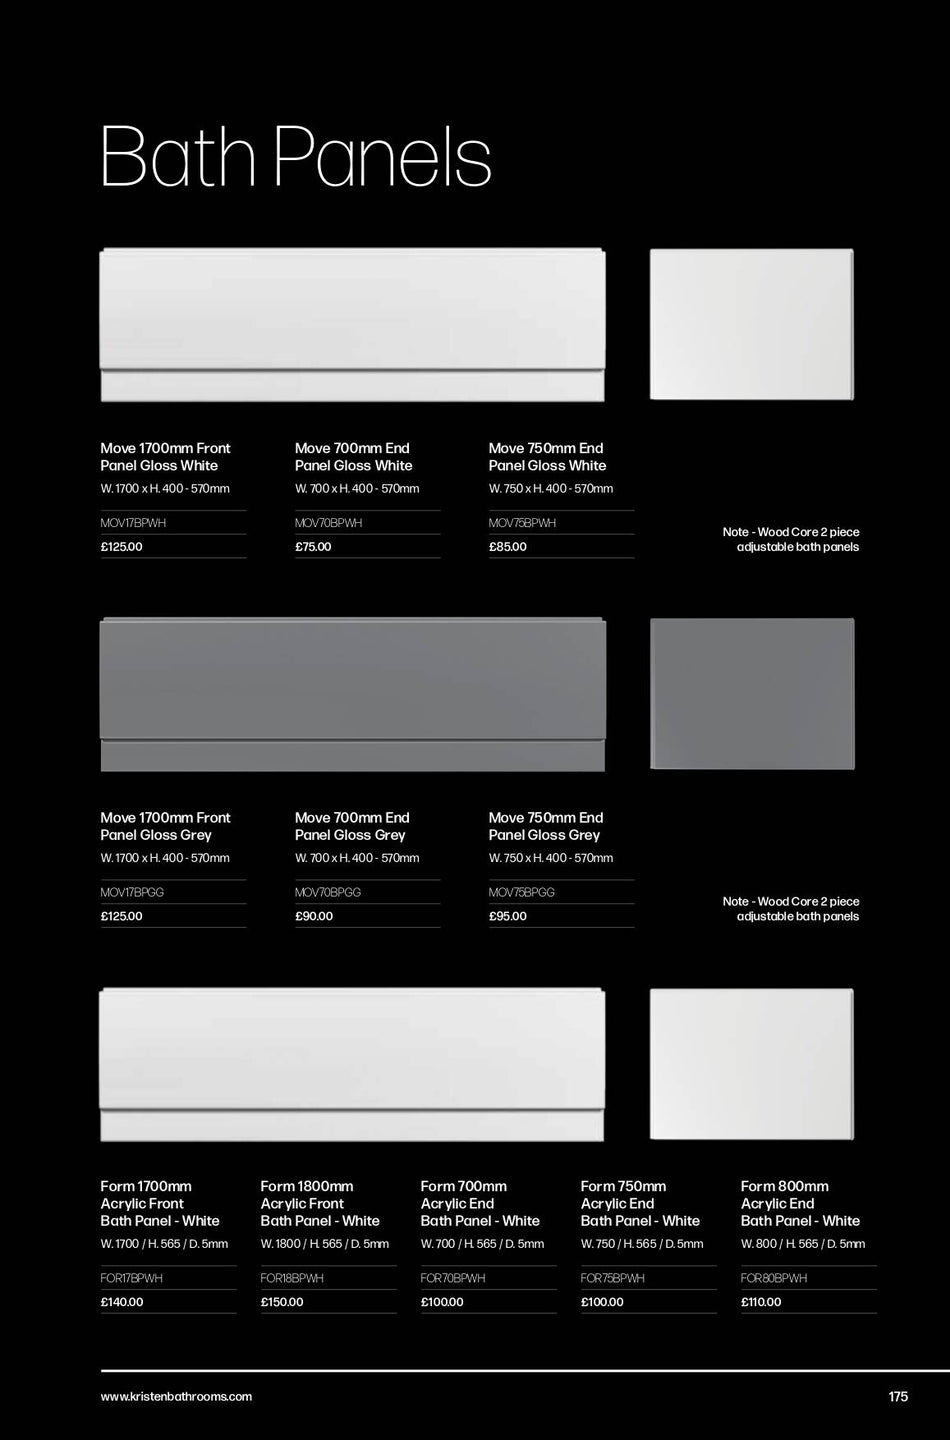 Bath Panels Move 1700mm Front Panel Gloss Grey